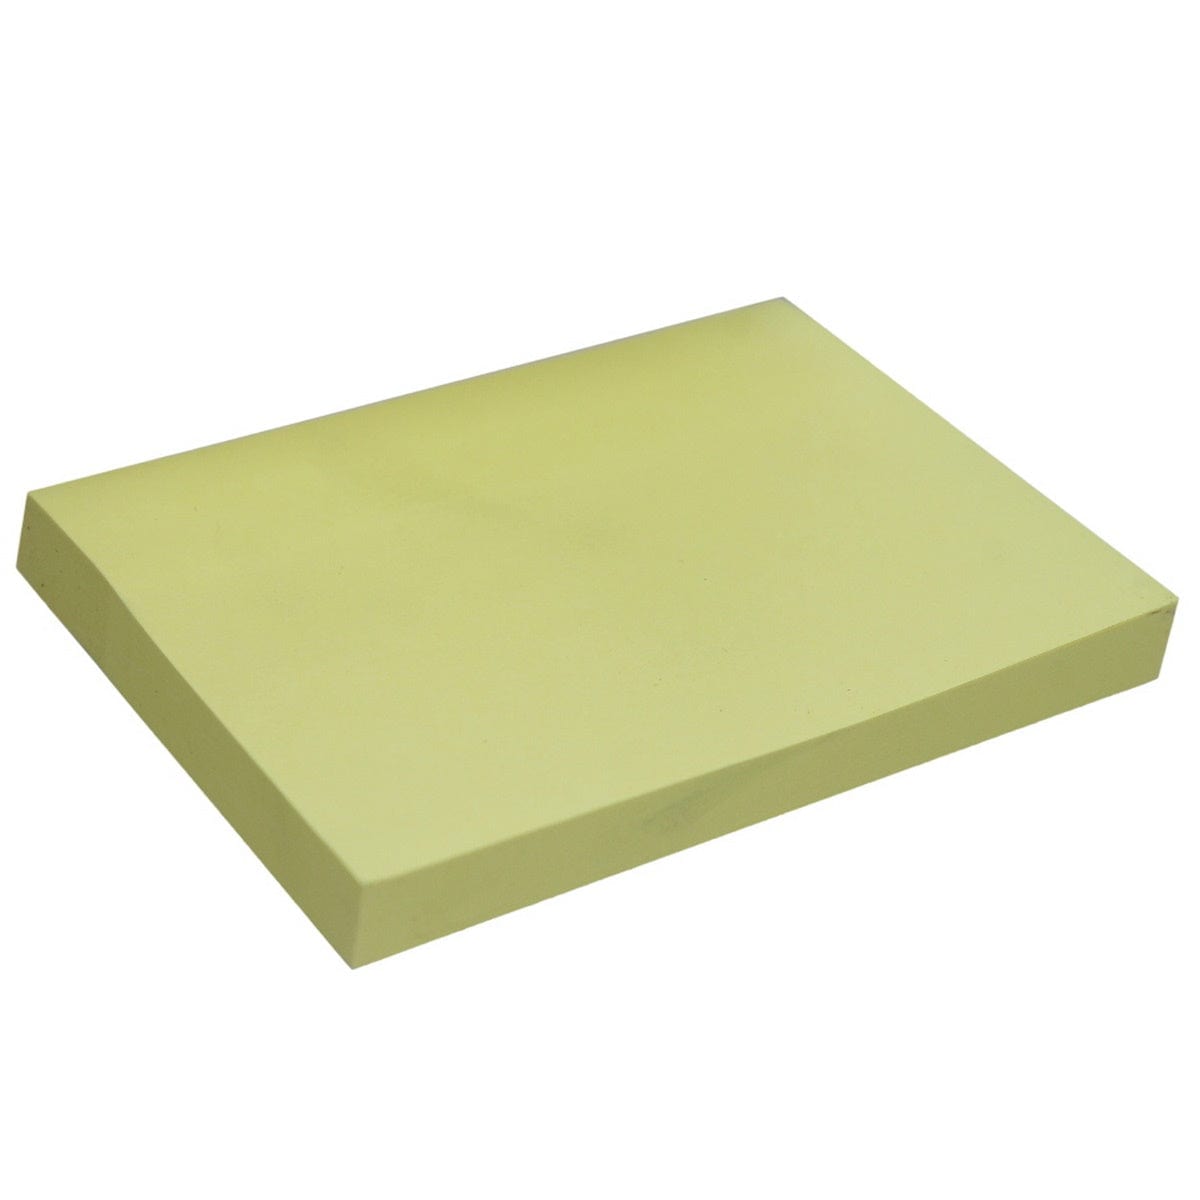 jags-mumbai Sticky Notes Sticky Note Pad Yellow 75mmX100mmX100S(3X4)